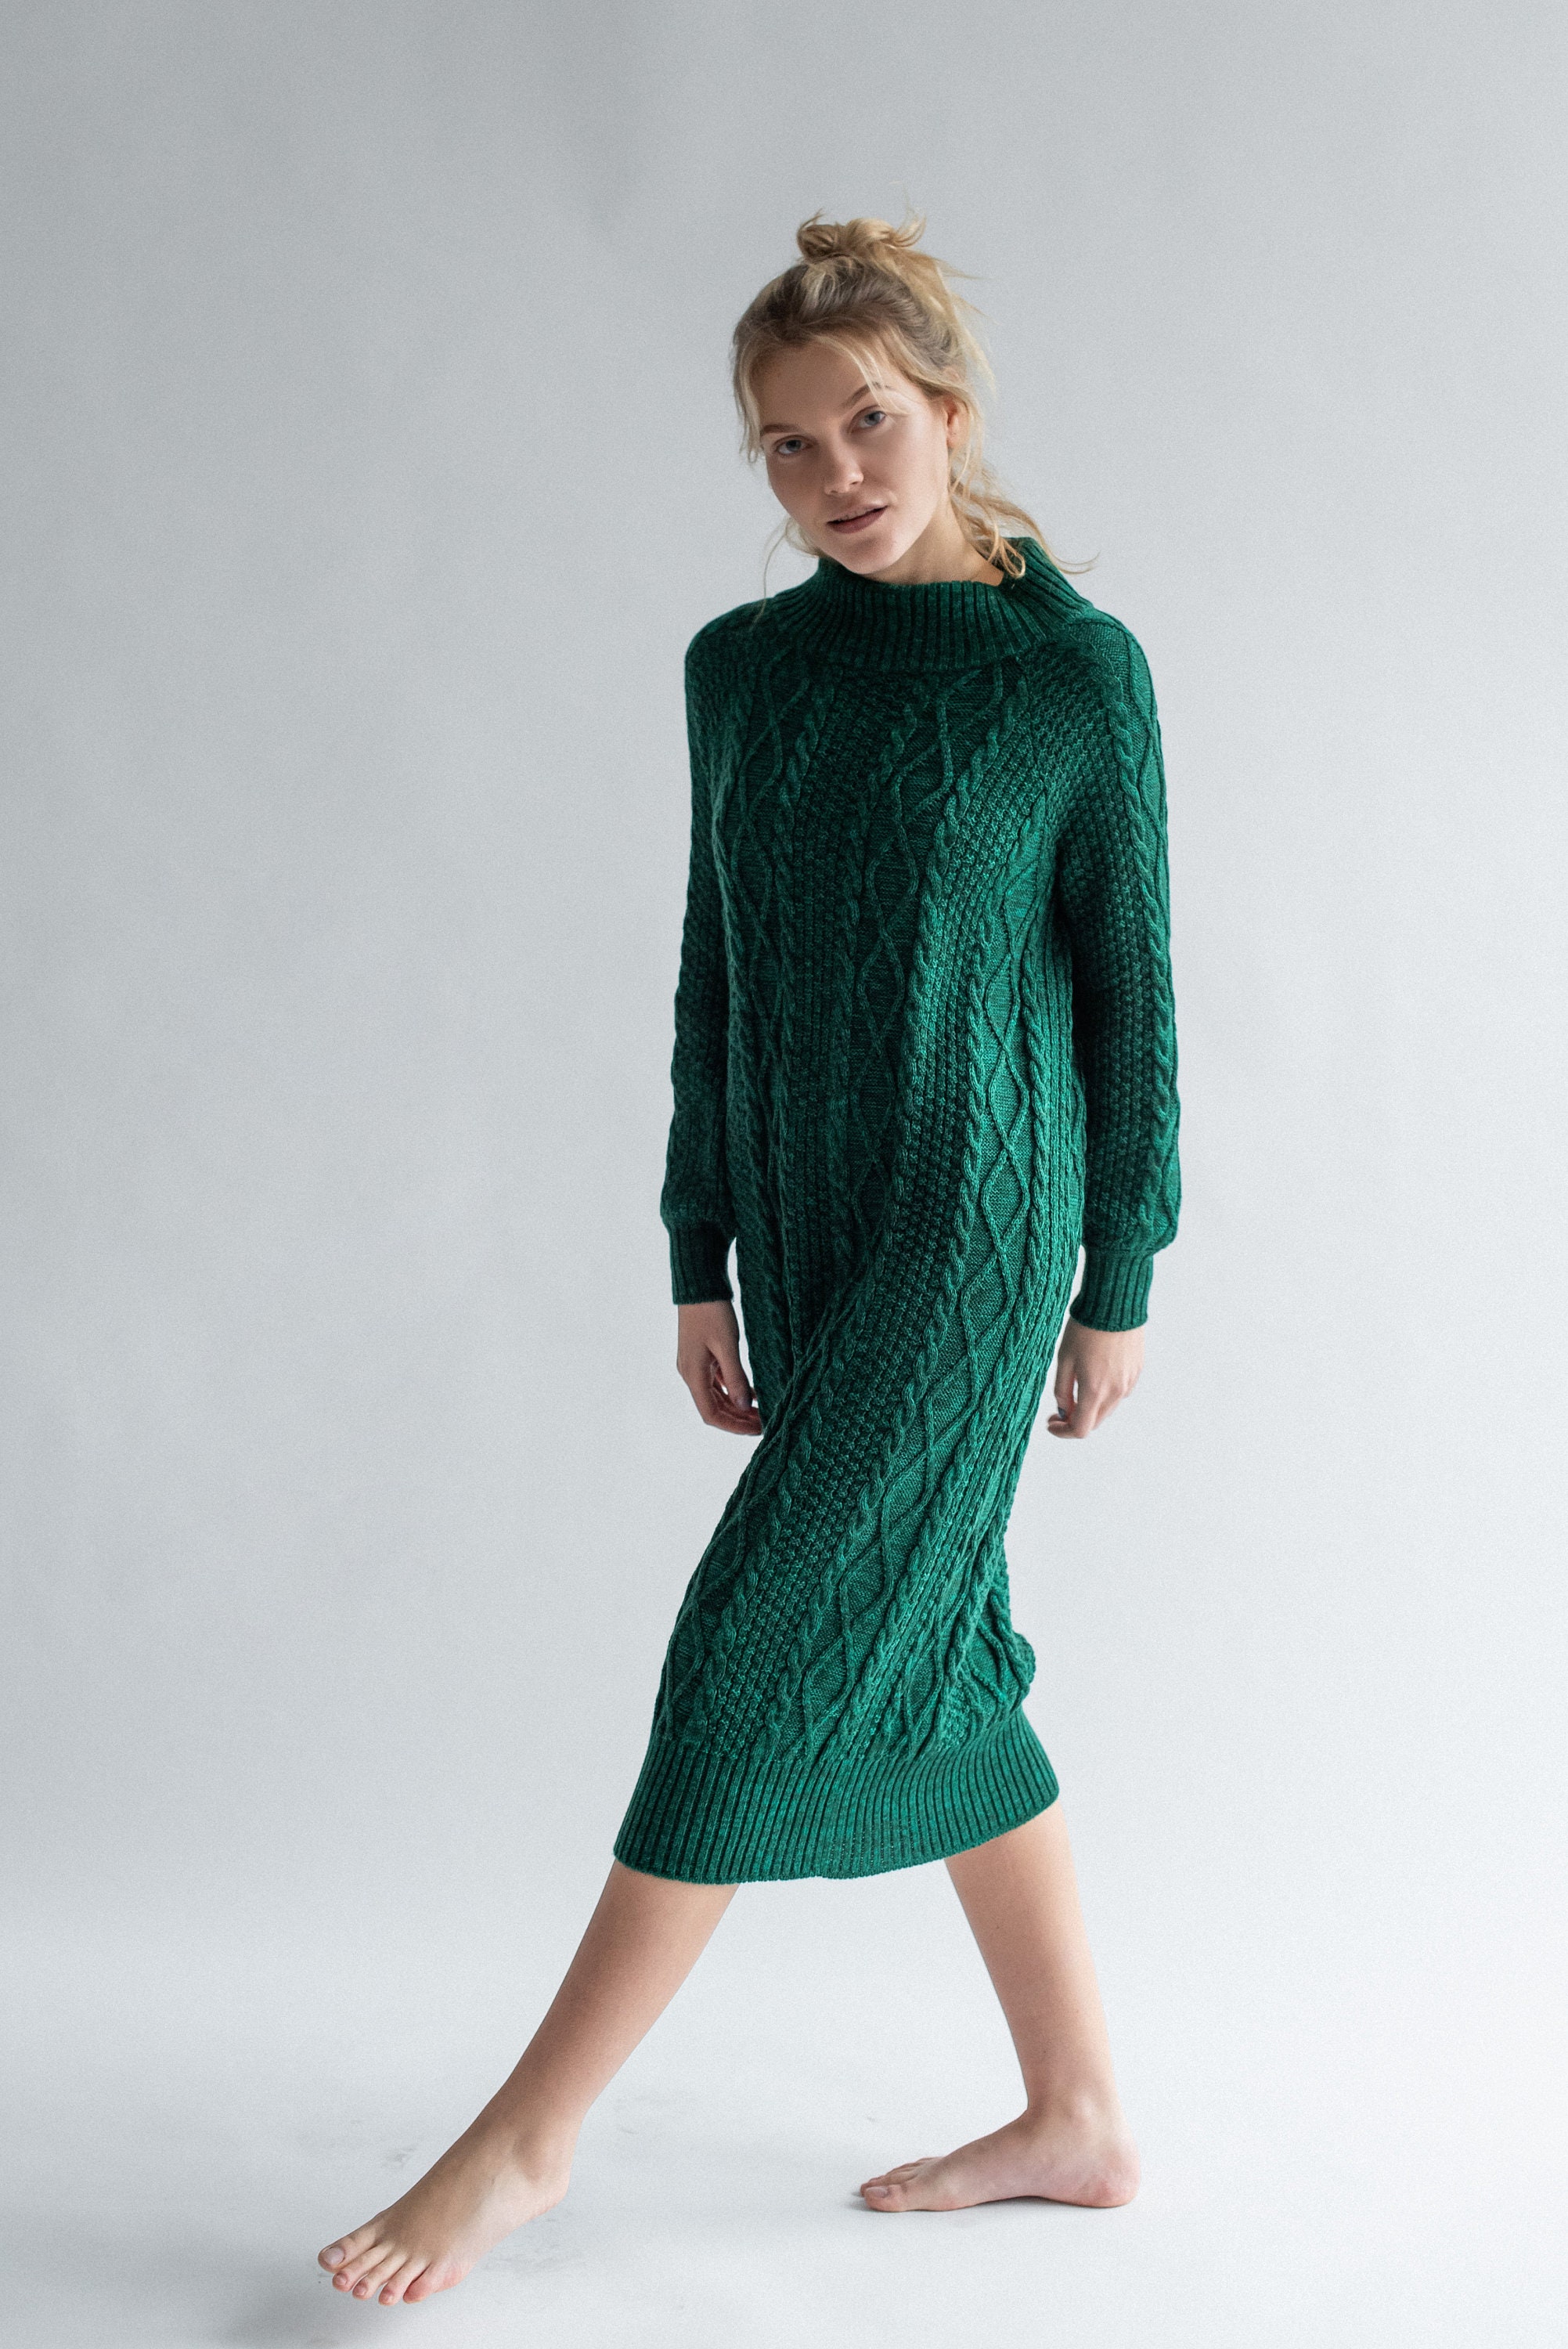 anekdote Revisor Omsorg Green Sweater Dress Plus Size Maxi Dress Wool Dress - Etsy Israel